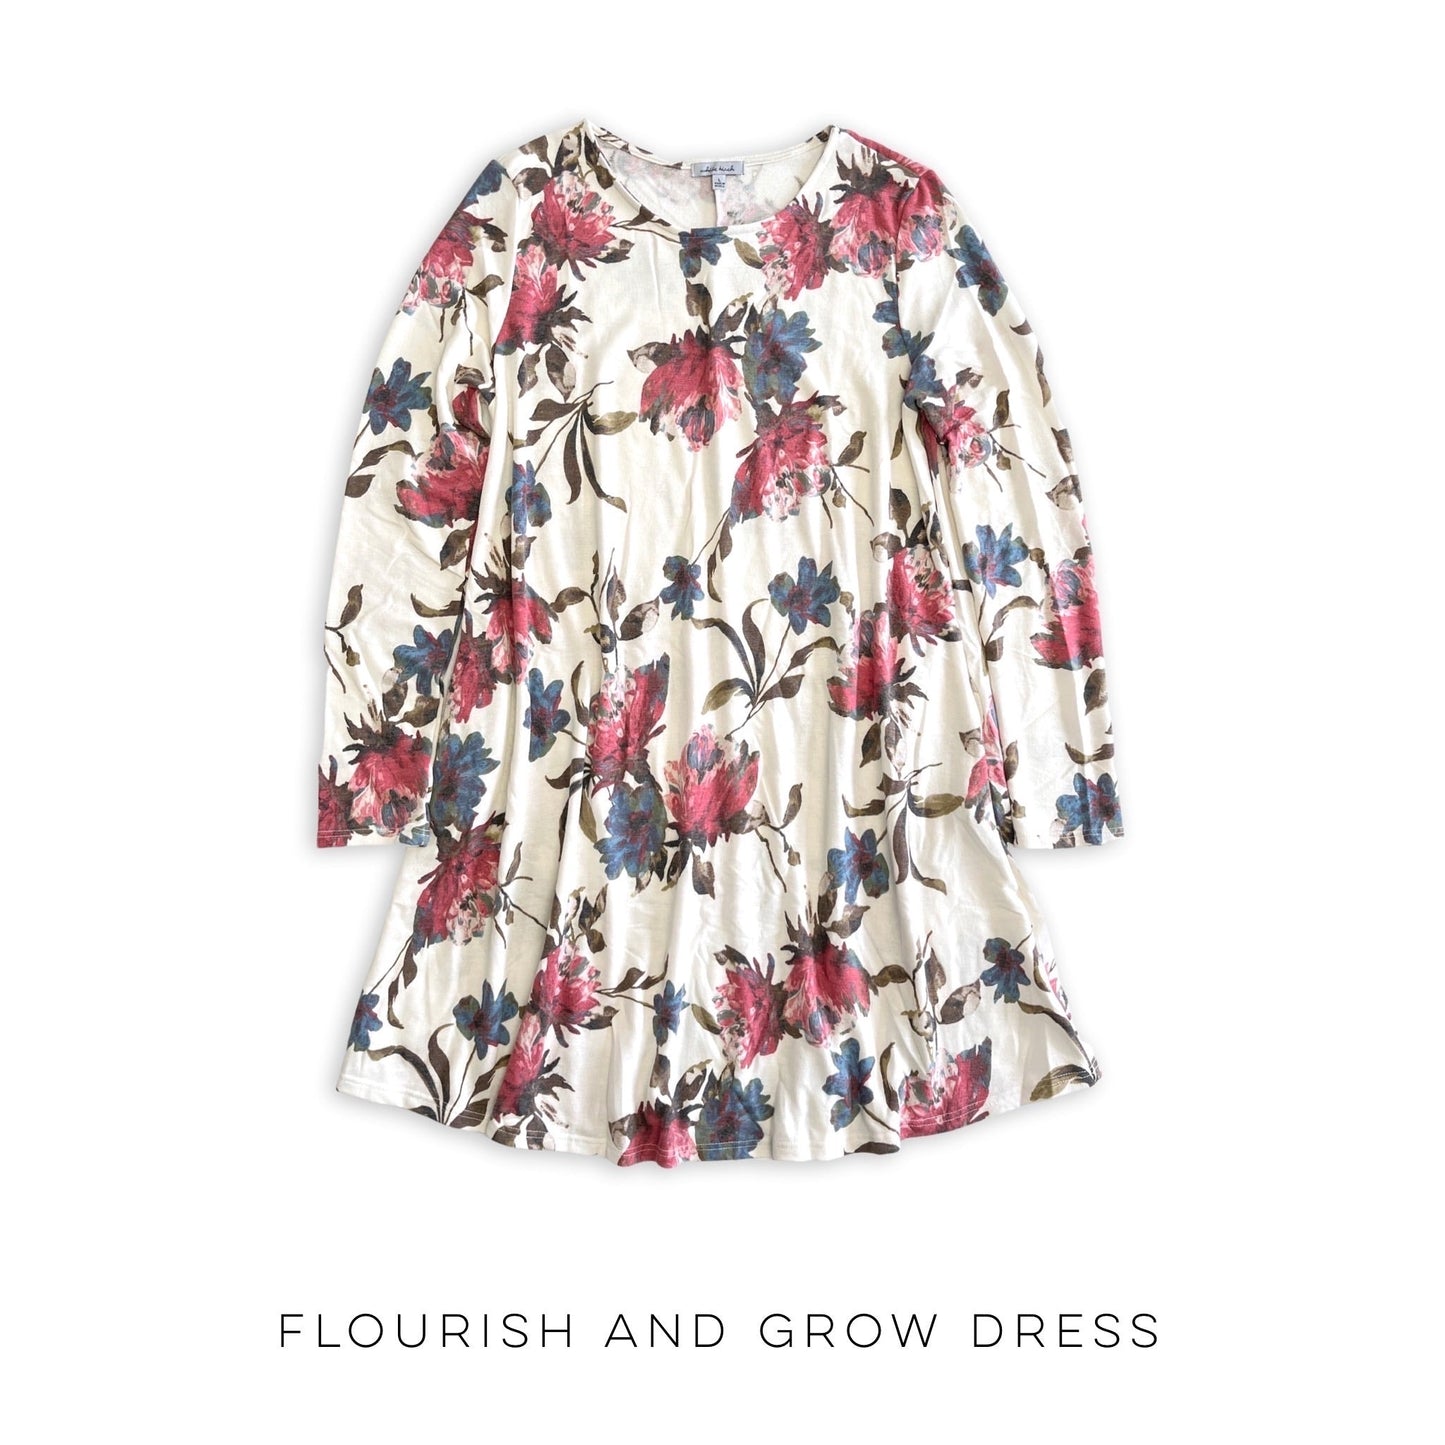 Flourish and Grow Dress